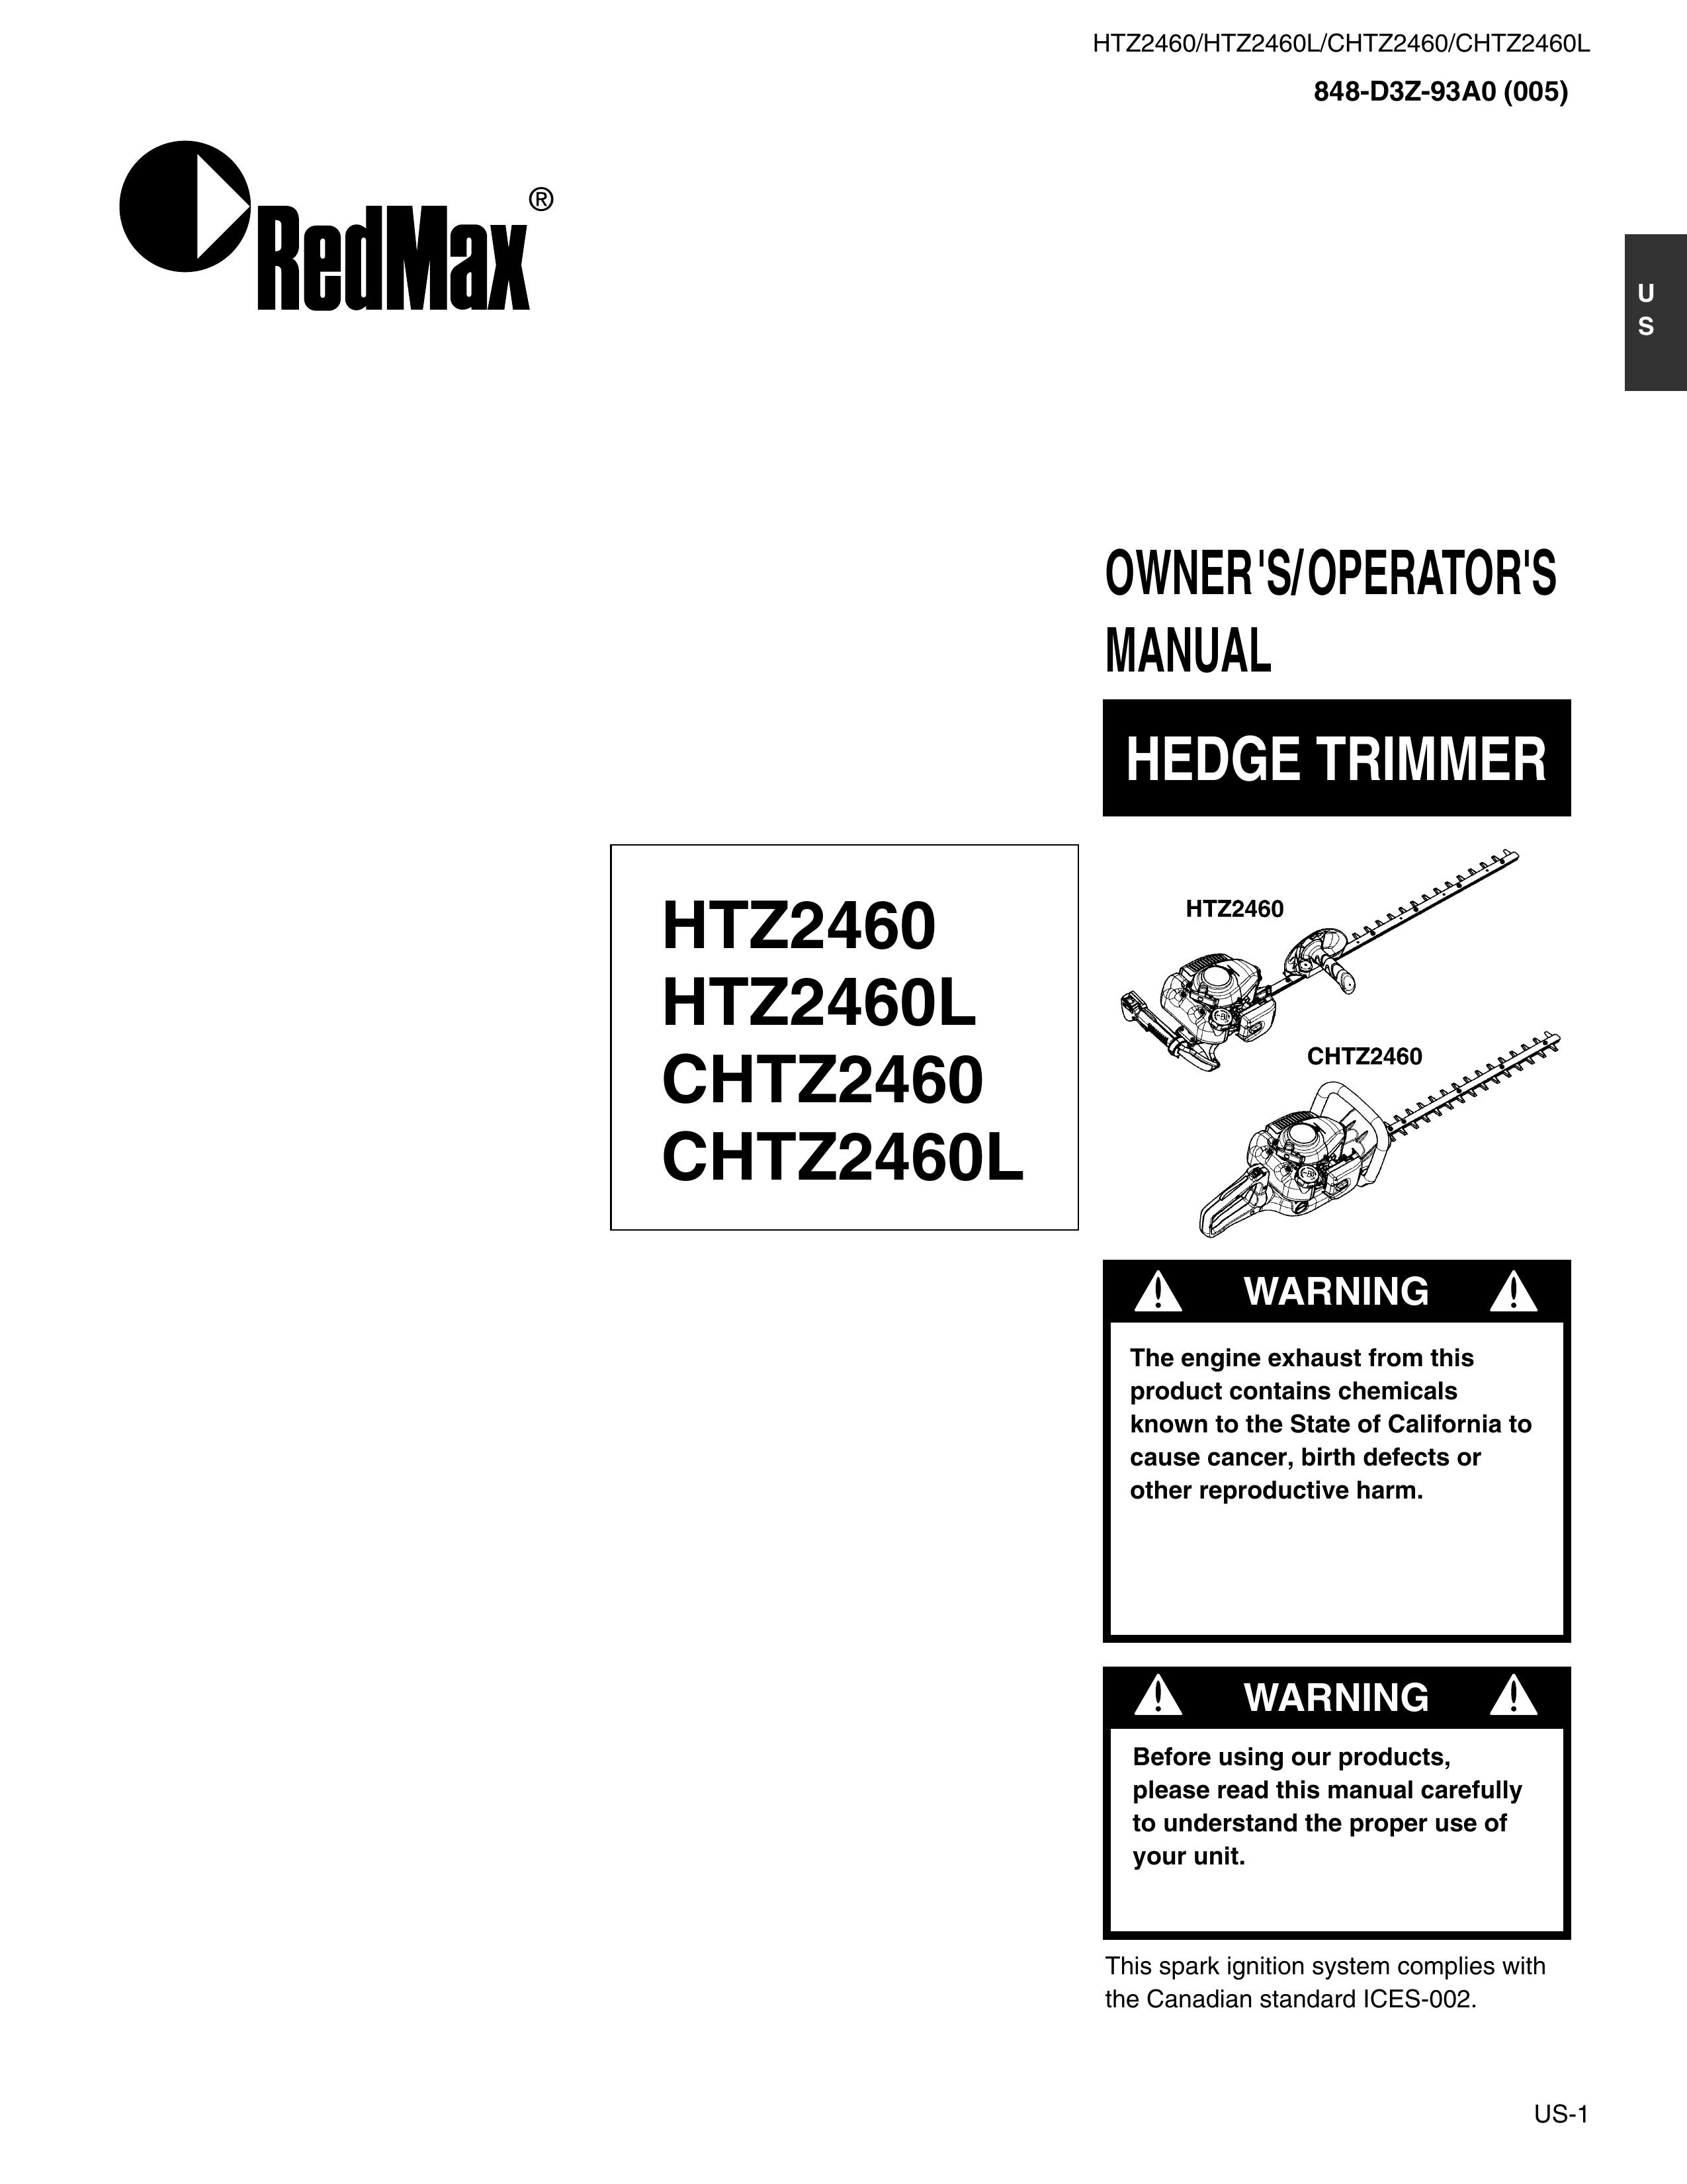 RedMax HTZ2460L Trimmer User Manual